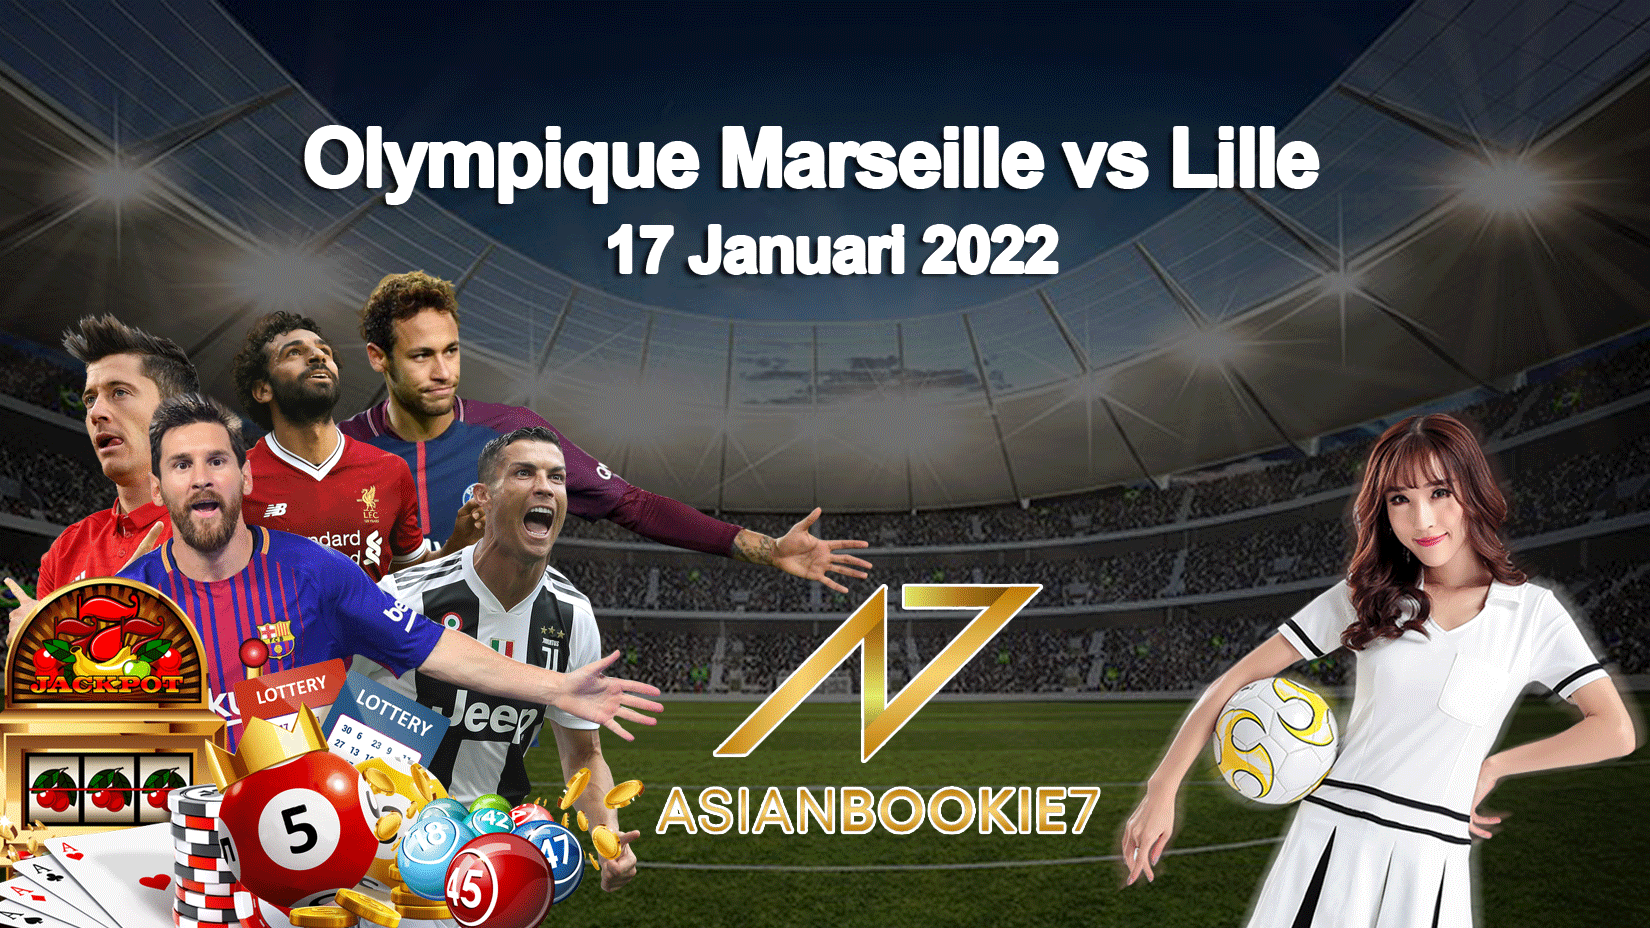 Prediksi-Olympique-Marseille-vs-Lille-17-Januari-2022